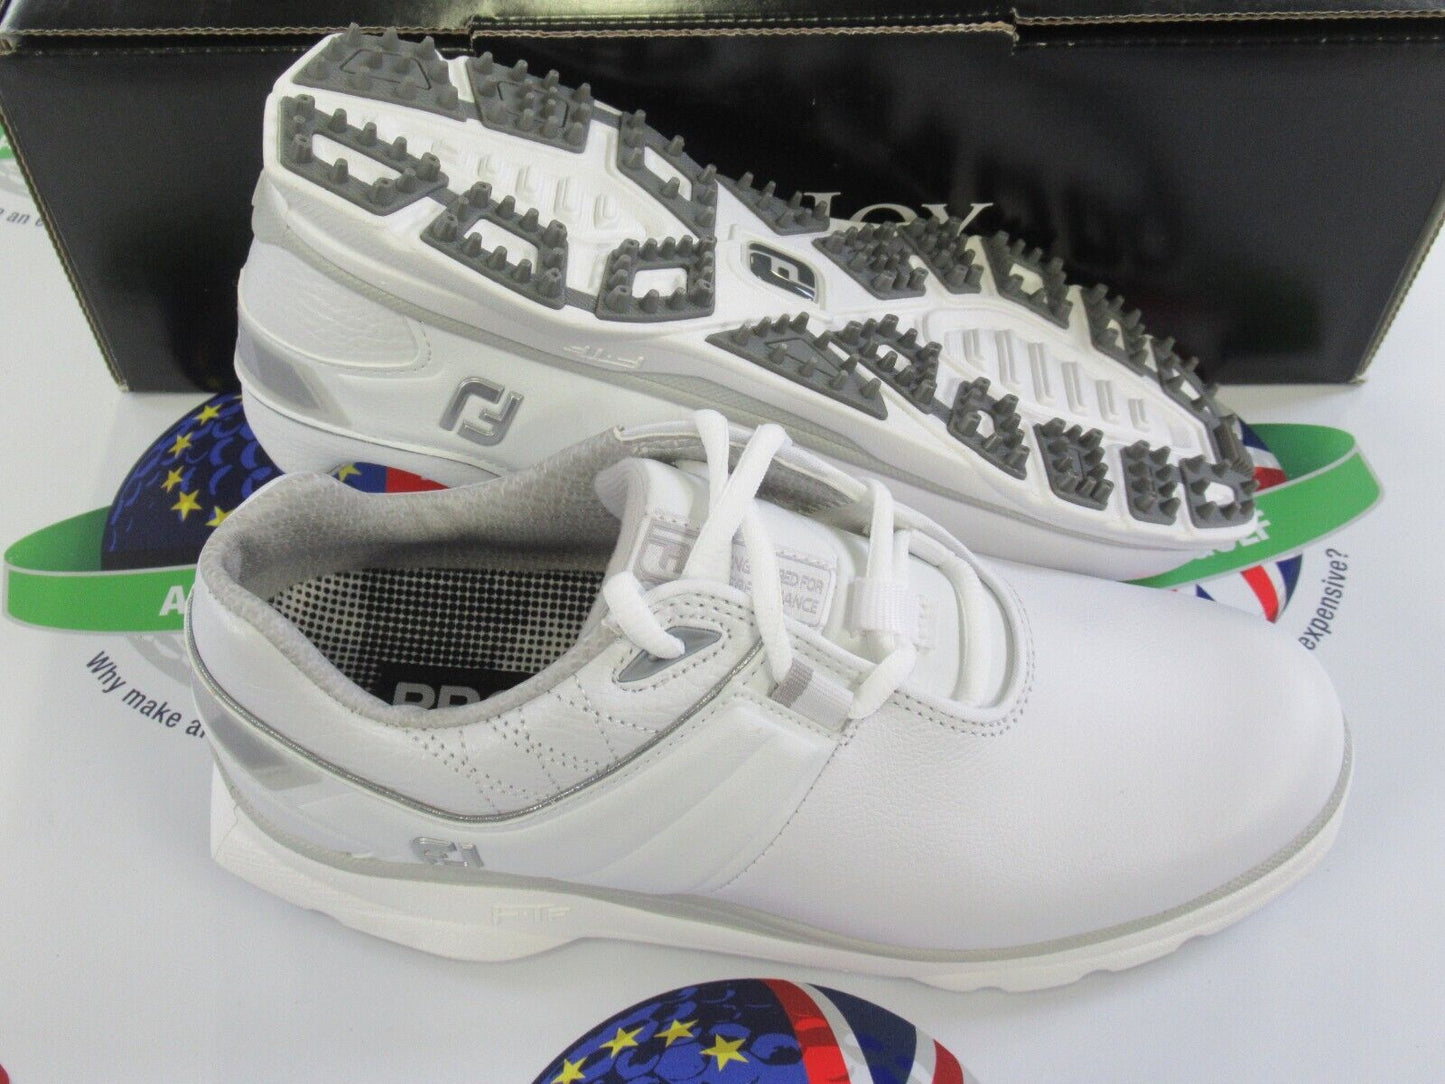 footjoy pro sl womens golf shoes white/silver uk size 5.5 wide/large